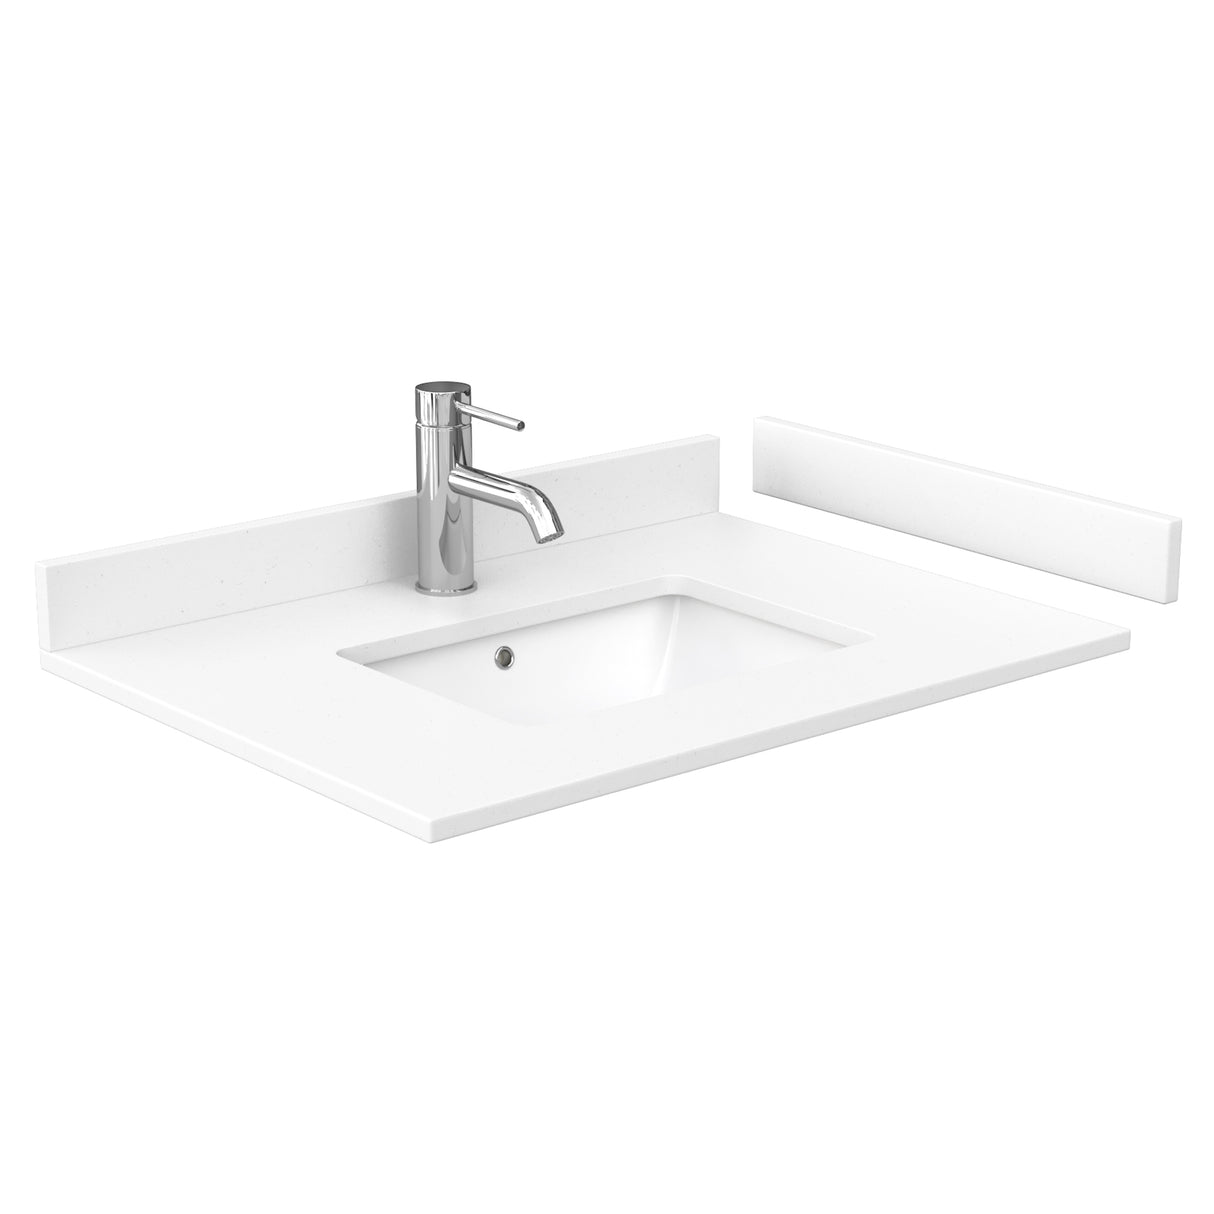 Daria 30 Inch Single Bathroom Vanity in White White Cultured Marble Countertop Undermount Square Sink Medicine Cabinet